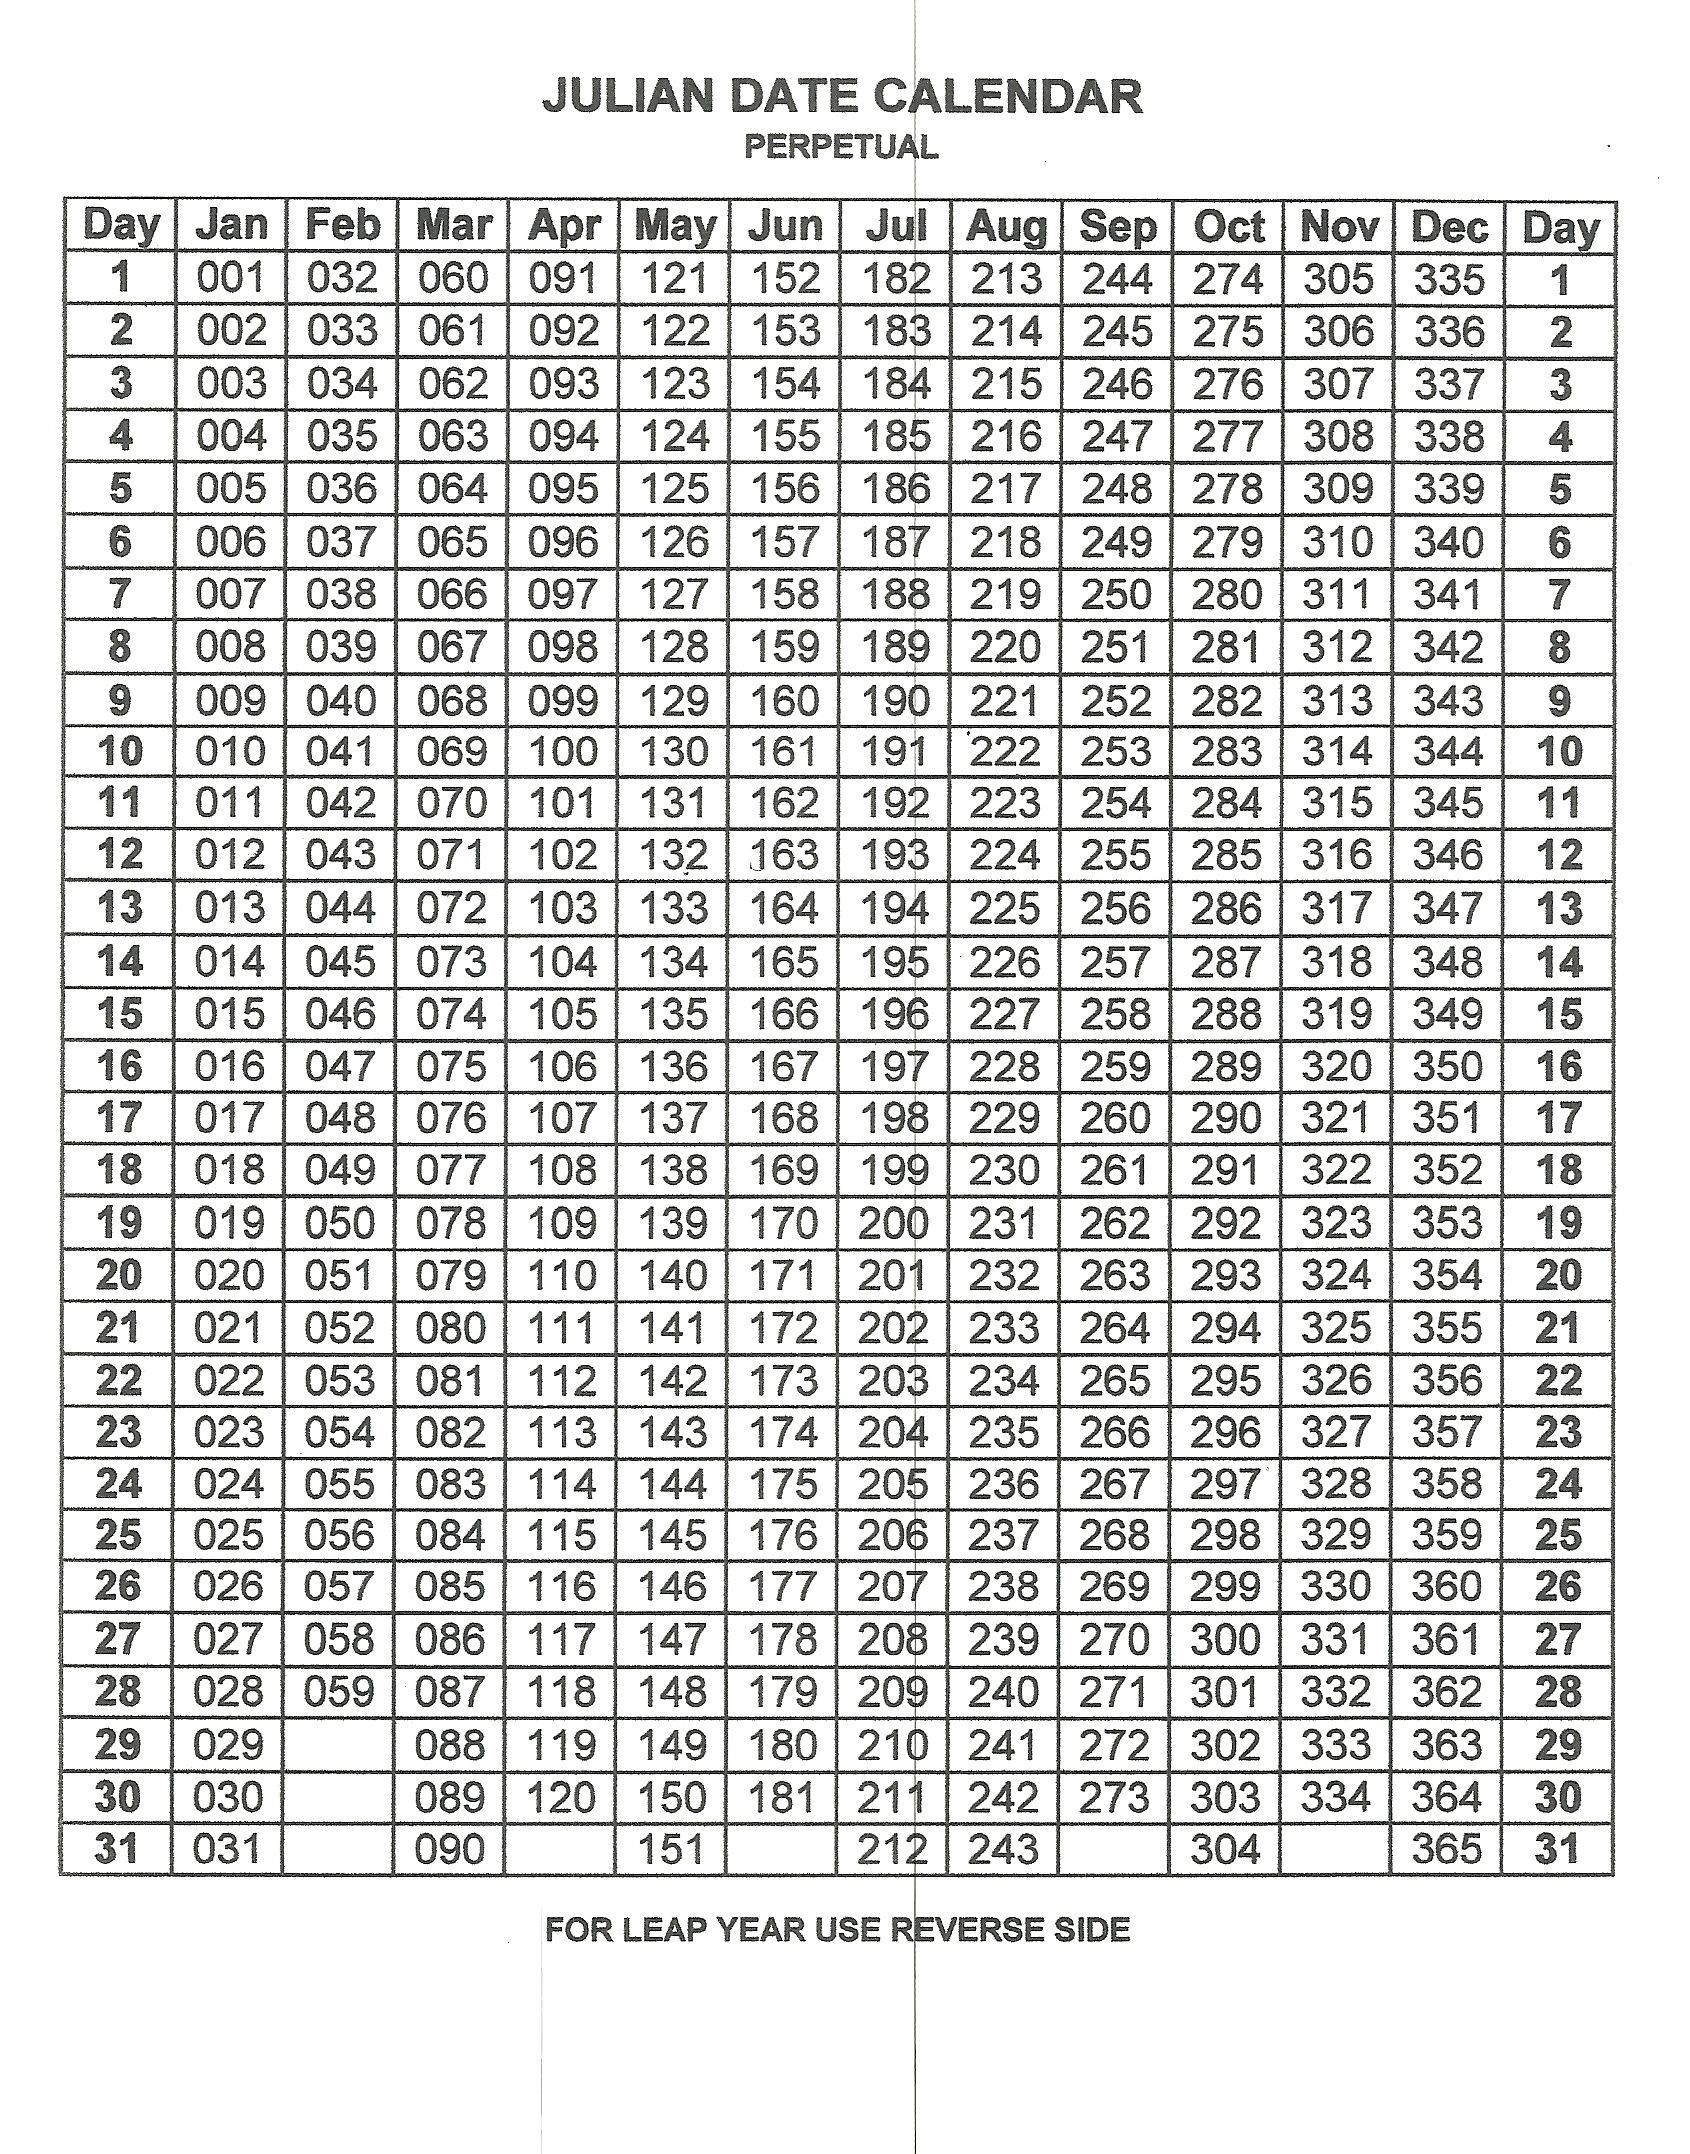 Perpetual Julian Date Calendar | Calendar Printables-Monthly Calendar With Julian Dates